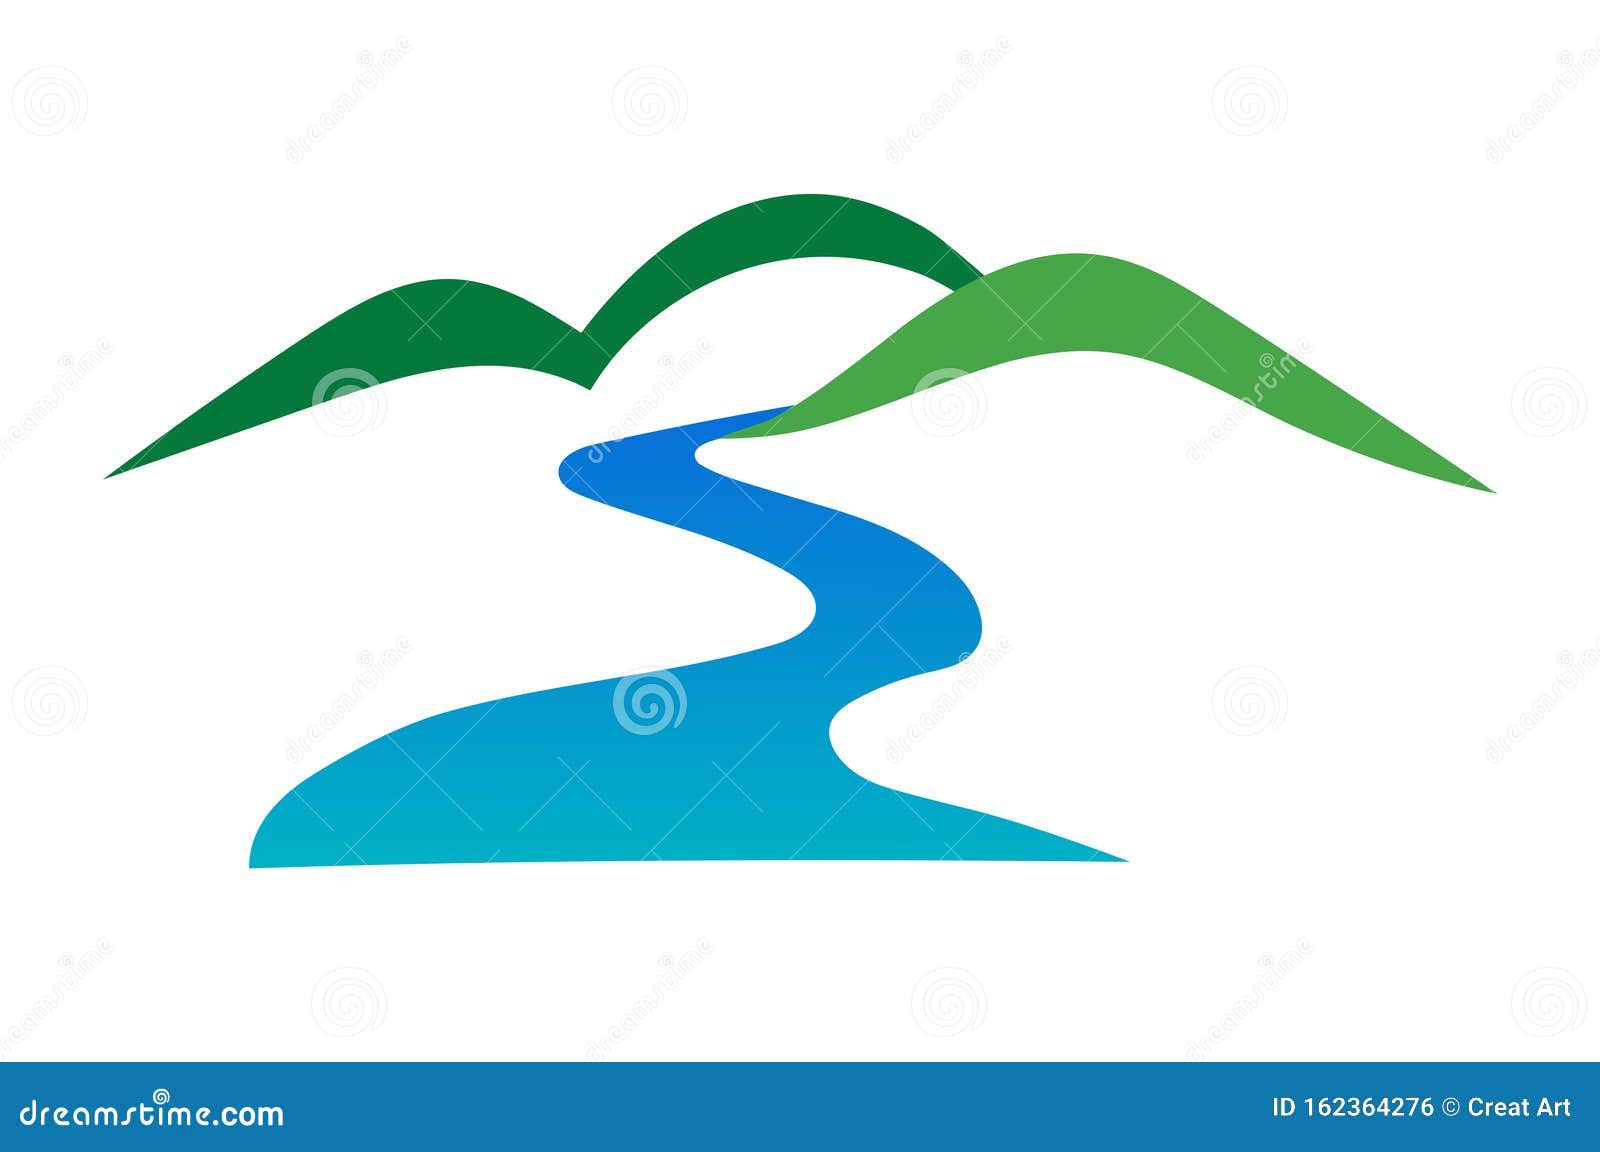 mountain river logo icon 